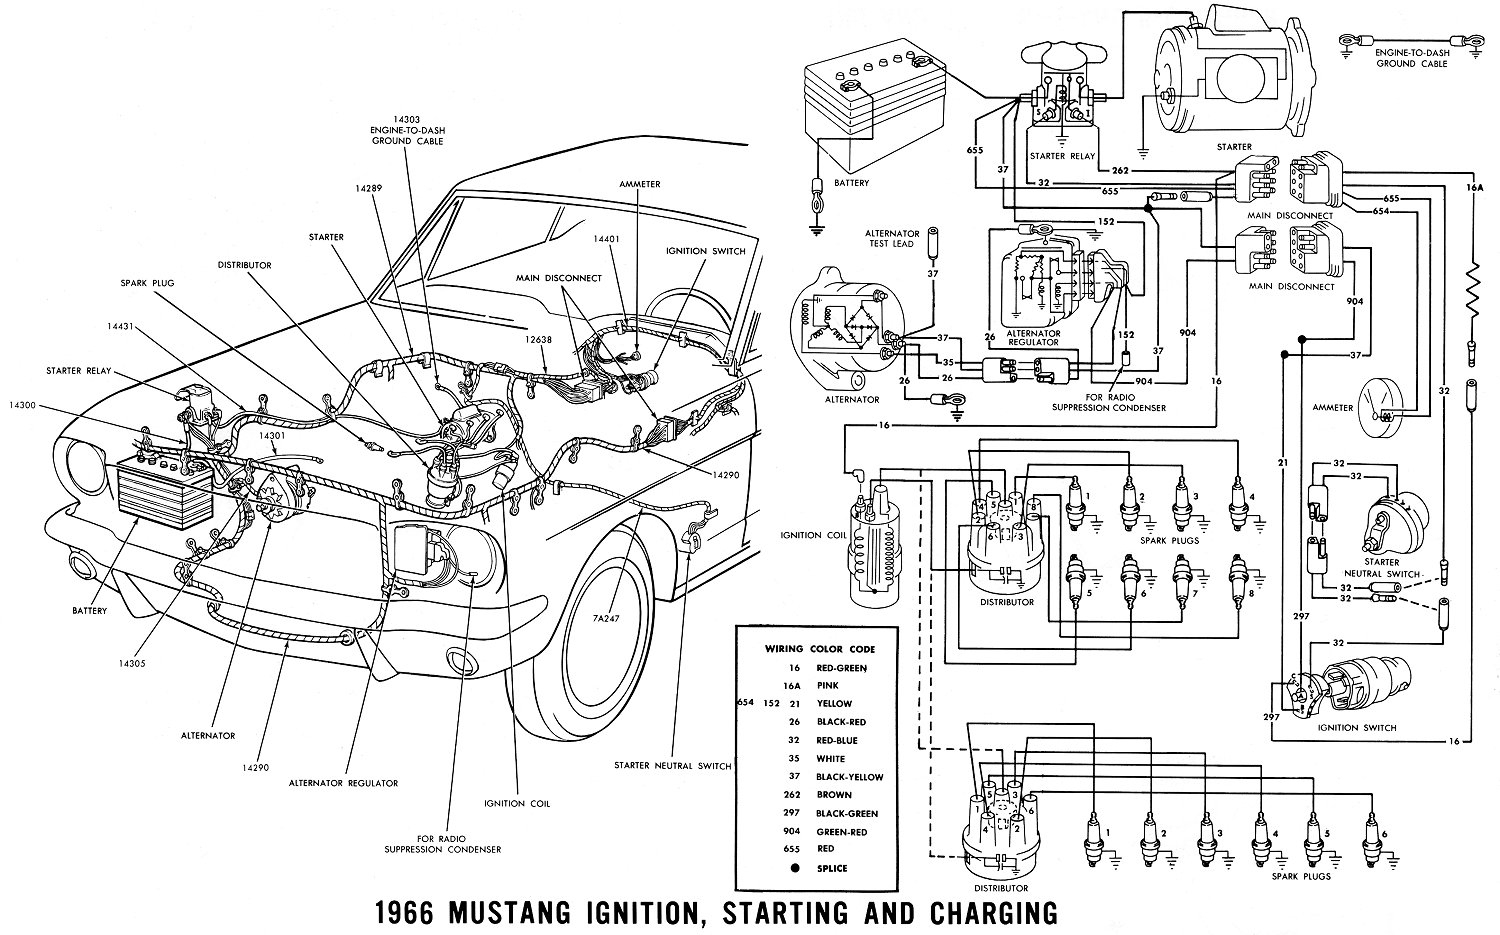 1966 Mustang Wiring Diagrams - Average Joe Restoration - 1966 Mustang Wiring Diagram